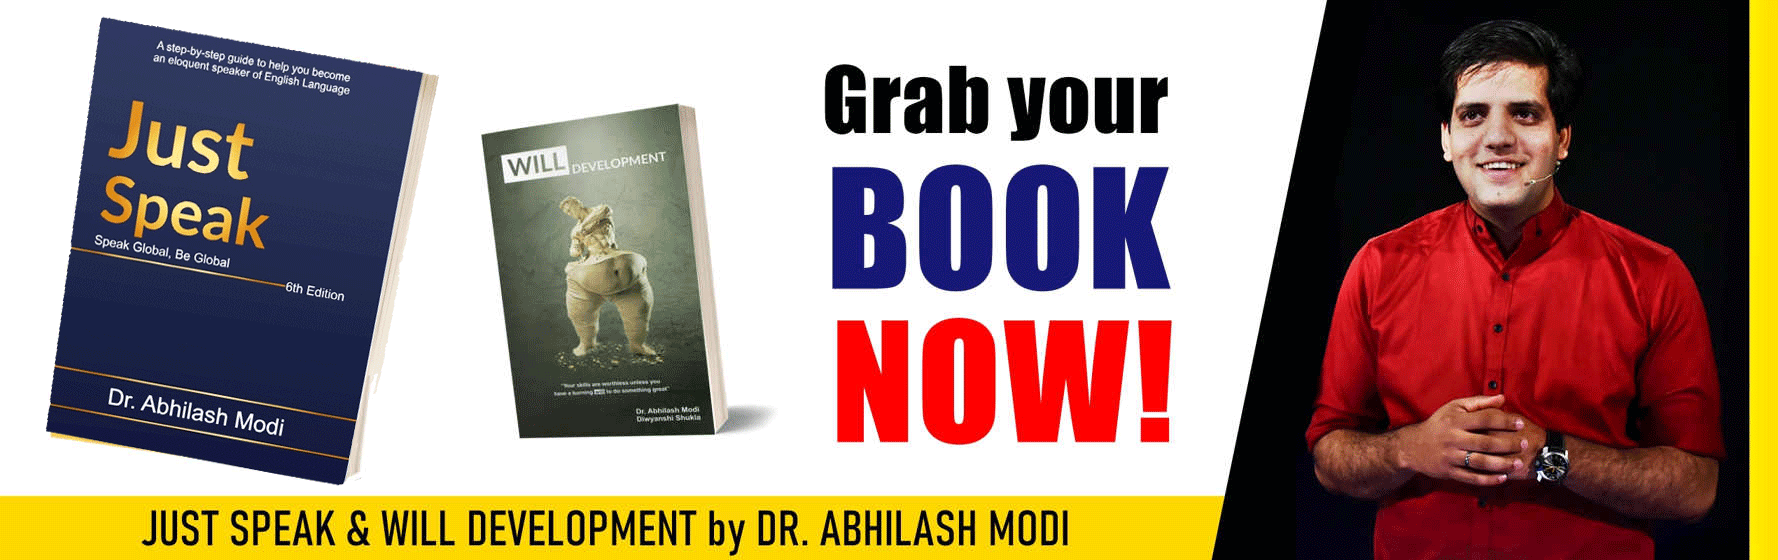 abhilash modi book